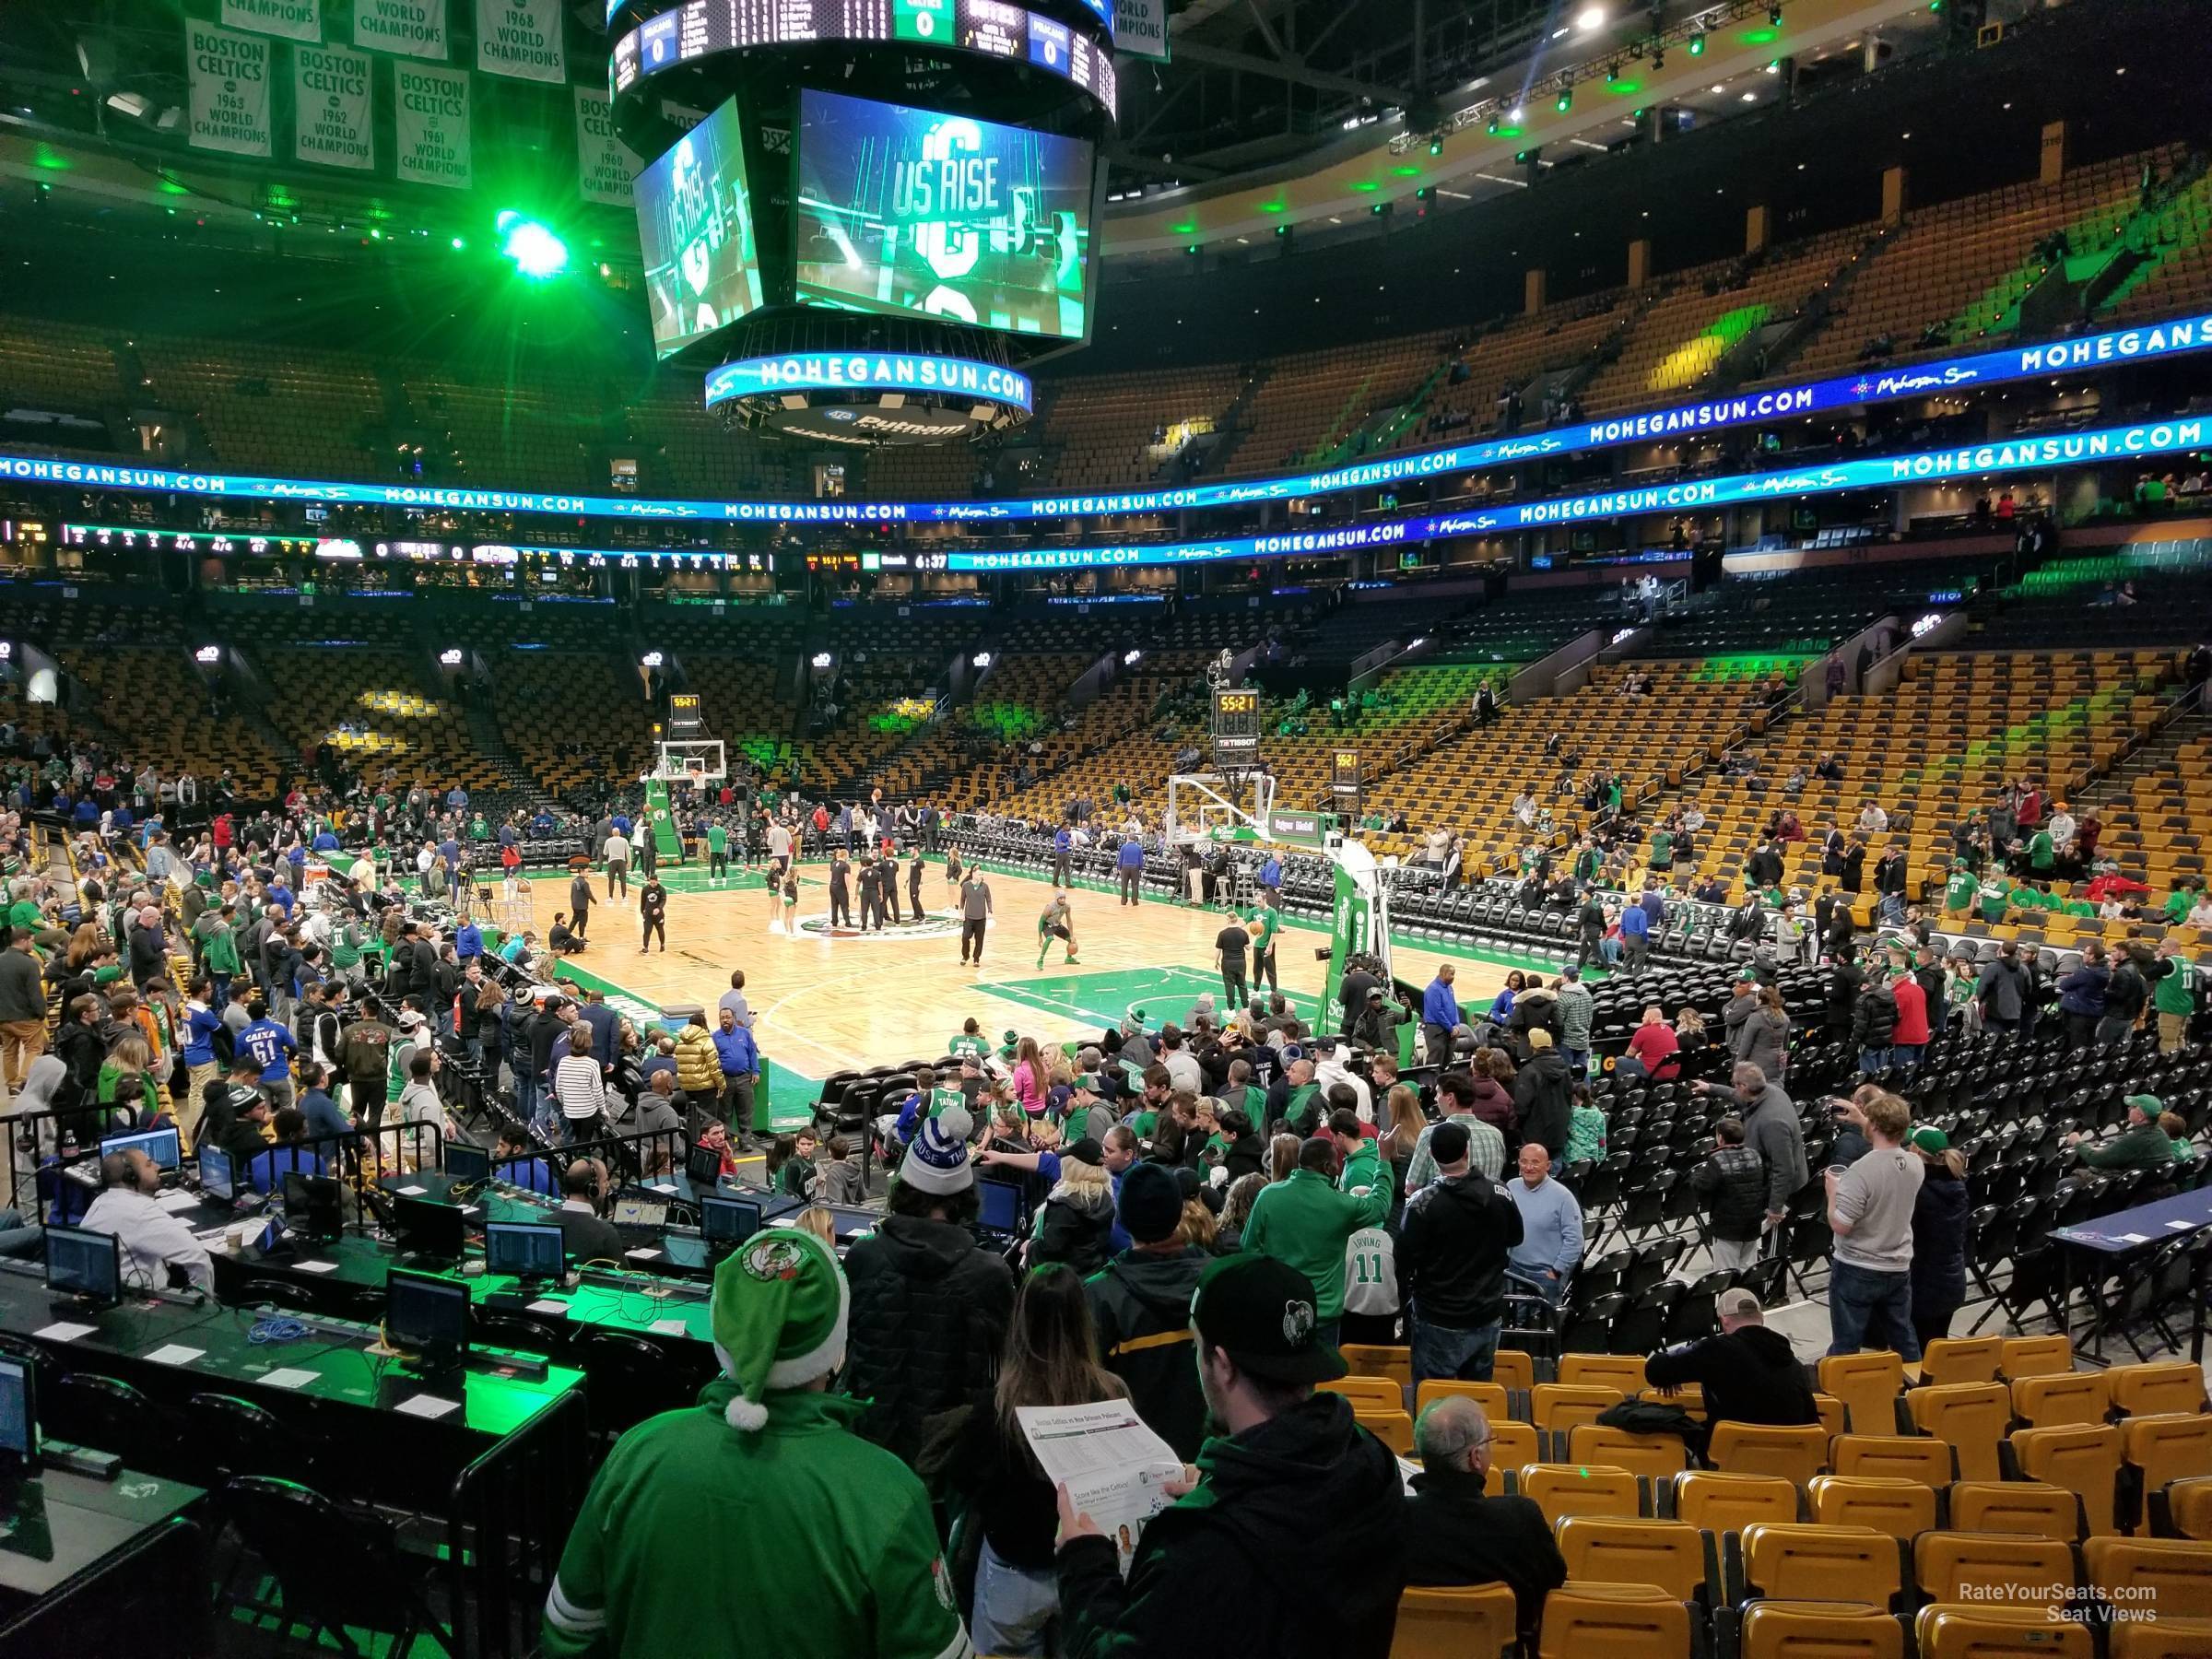 Loge 19 at TD Garden Boston Celtics RateYourSeats com